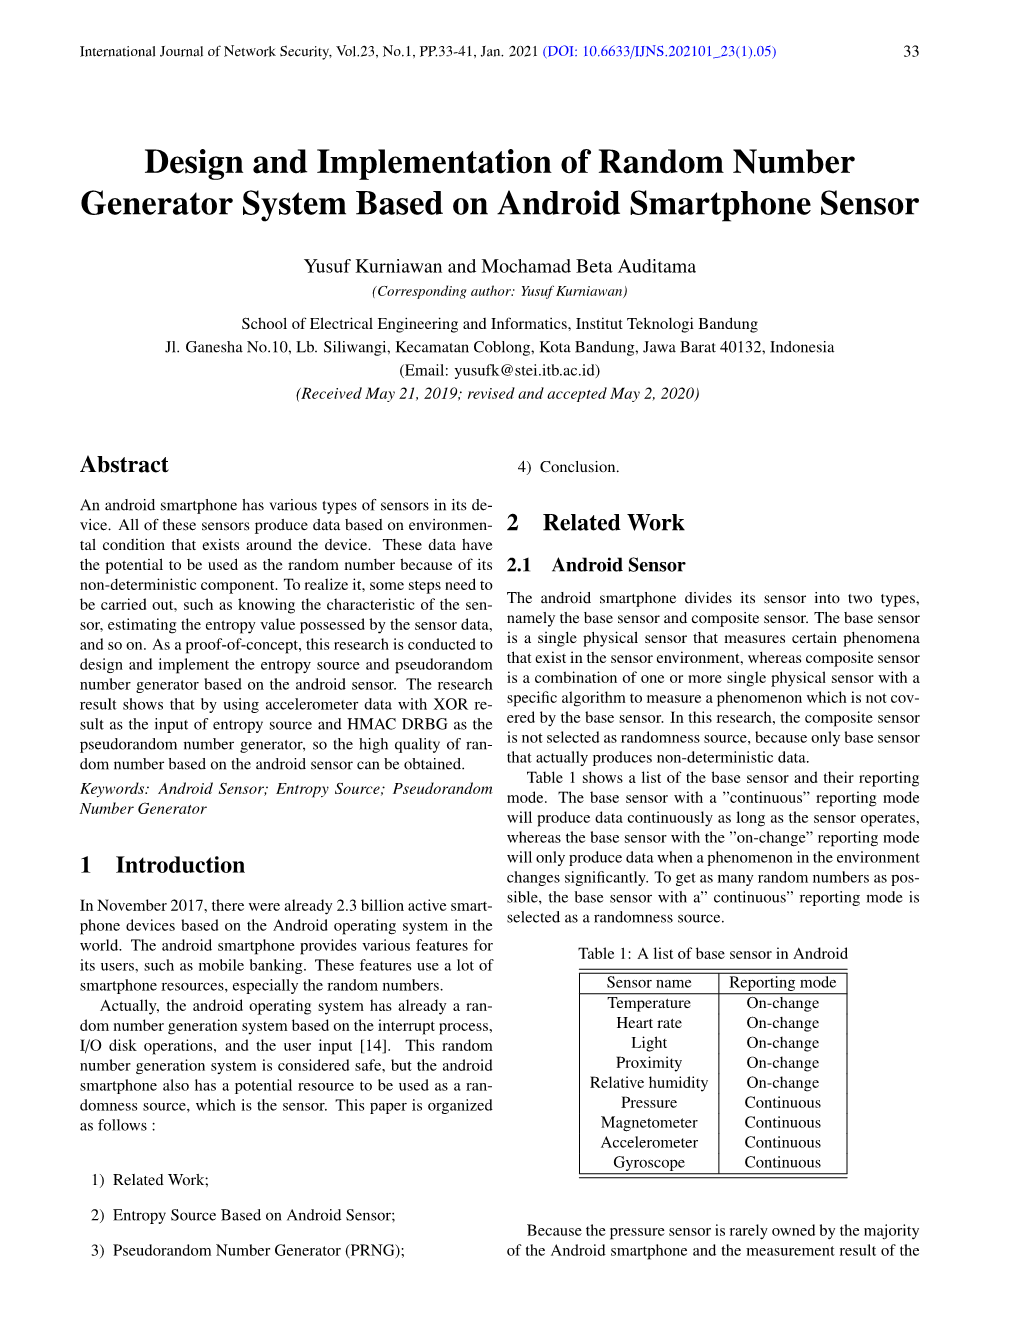 Design and Implementation of Random Number Generator System Based on Android Smartphone Sensor